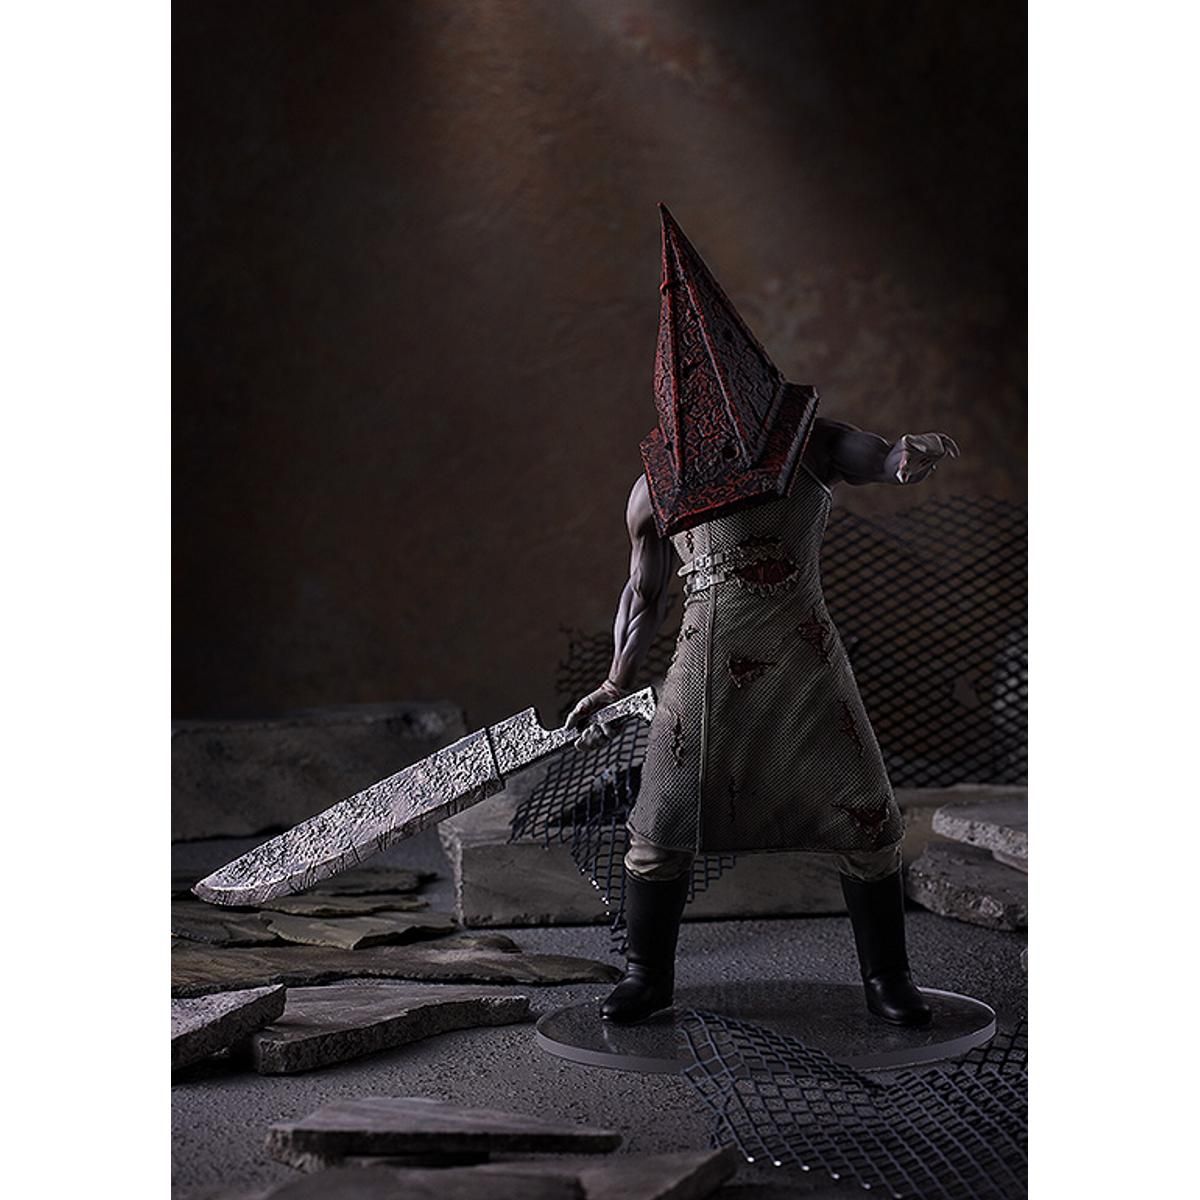 Silent Hill Pyramid Head Figure